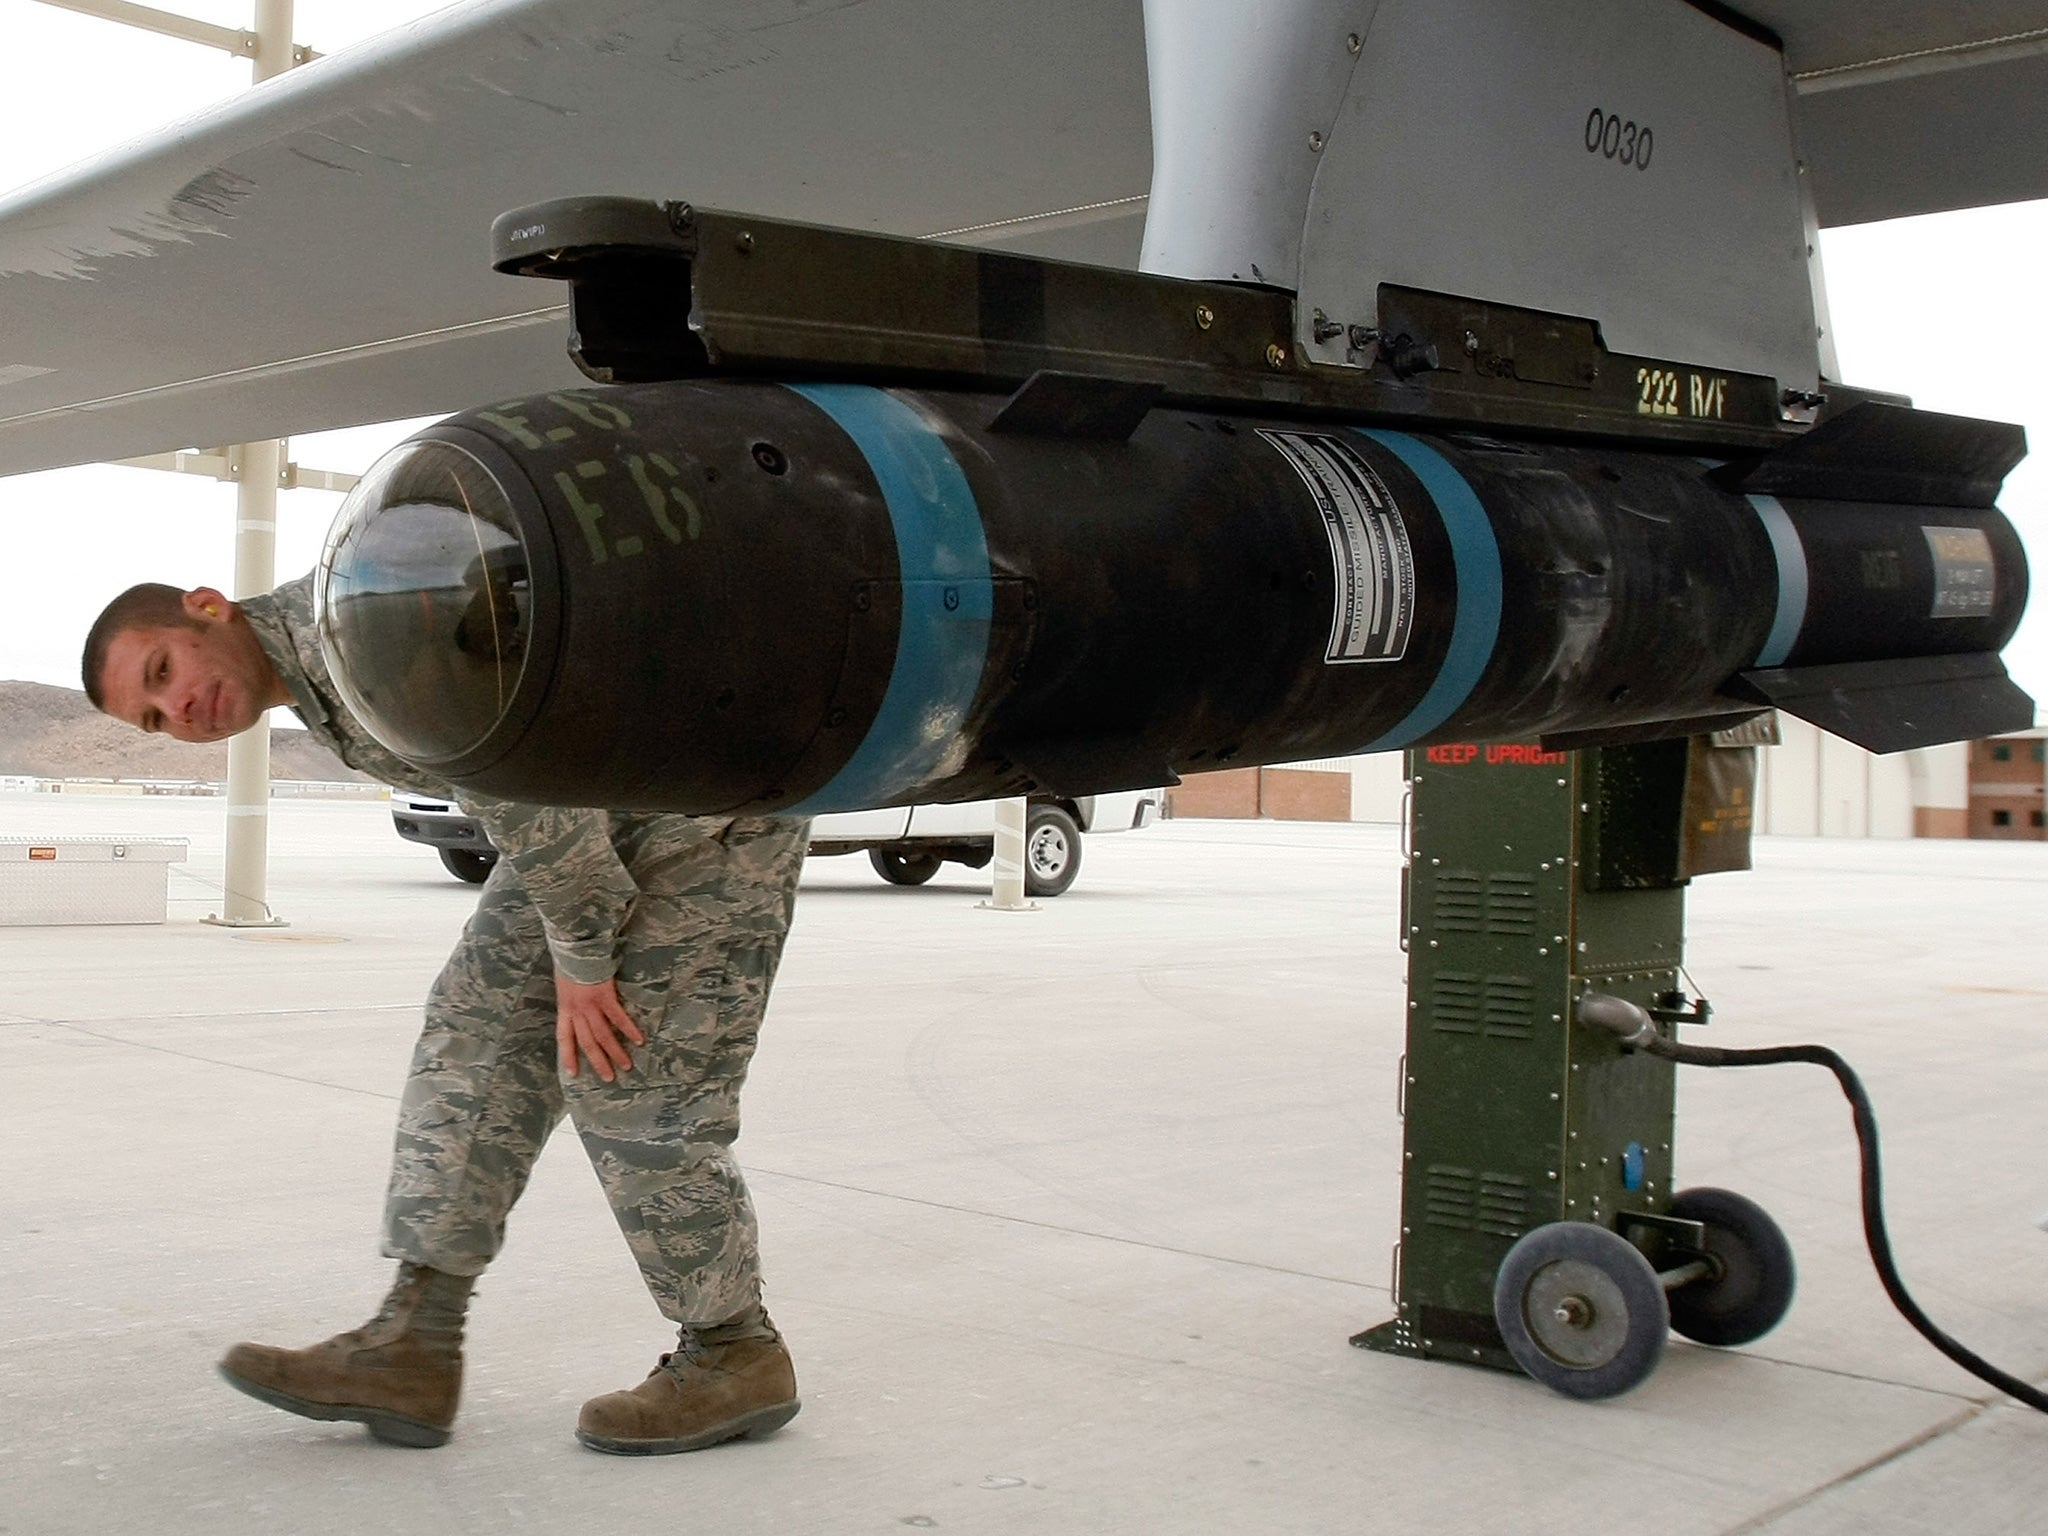 A Hellfire missile sits underneath a MQ-1B Predator unmanned aircraft system